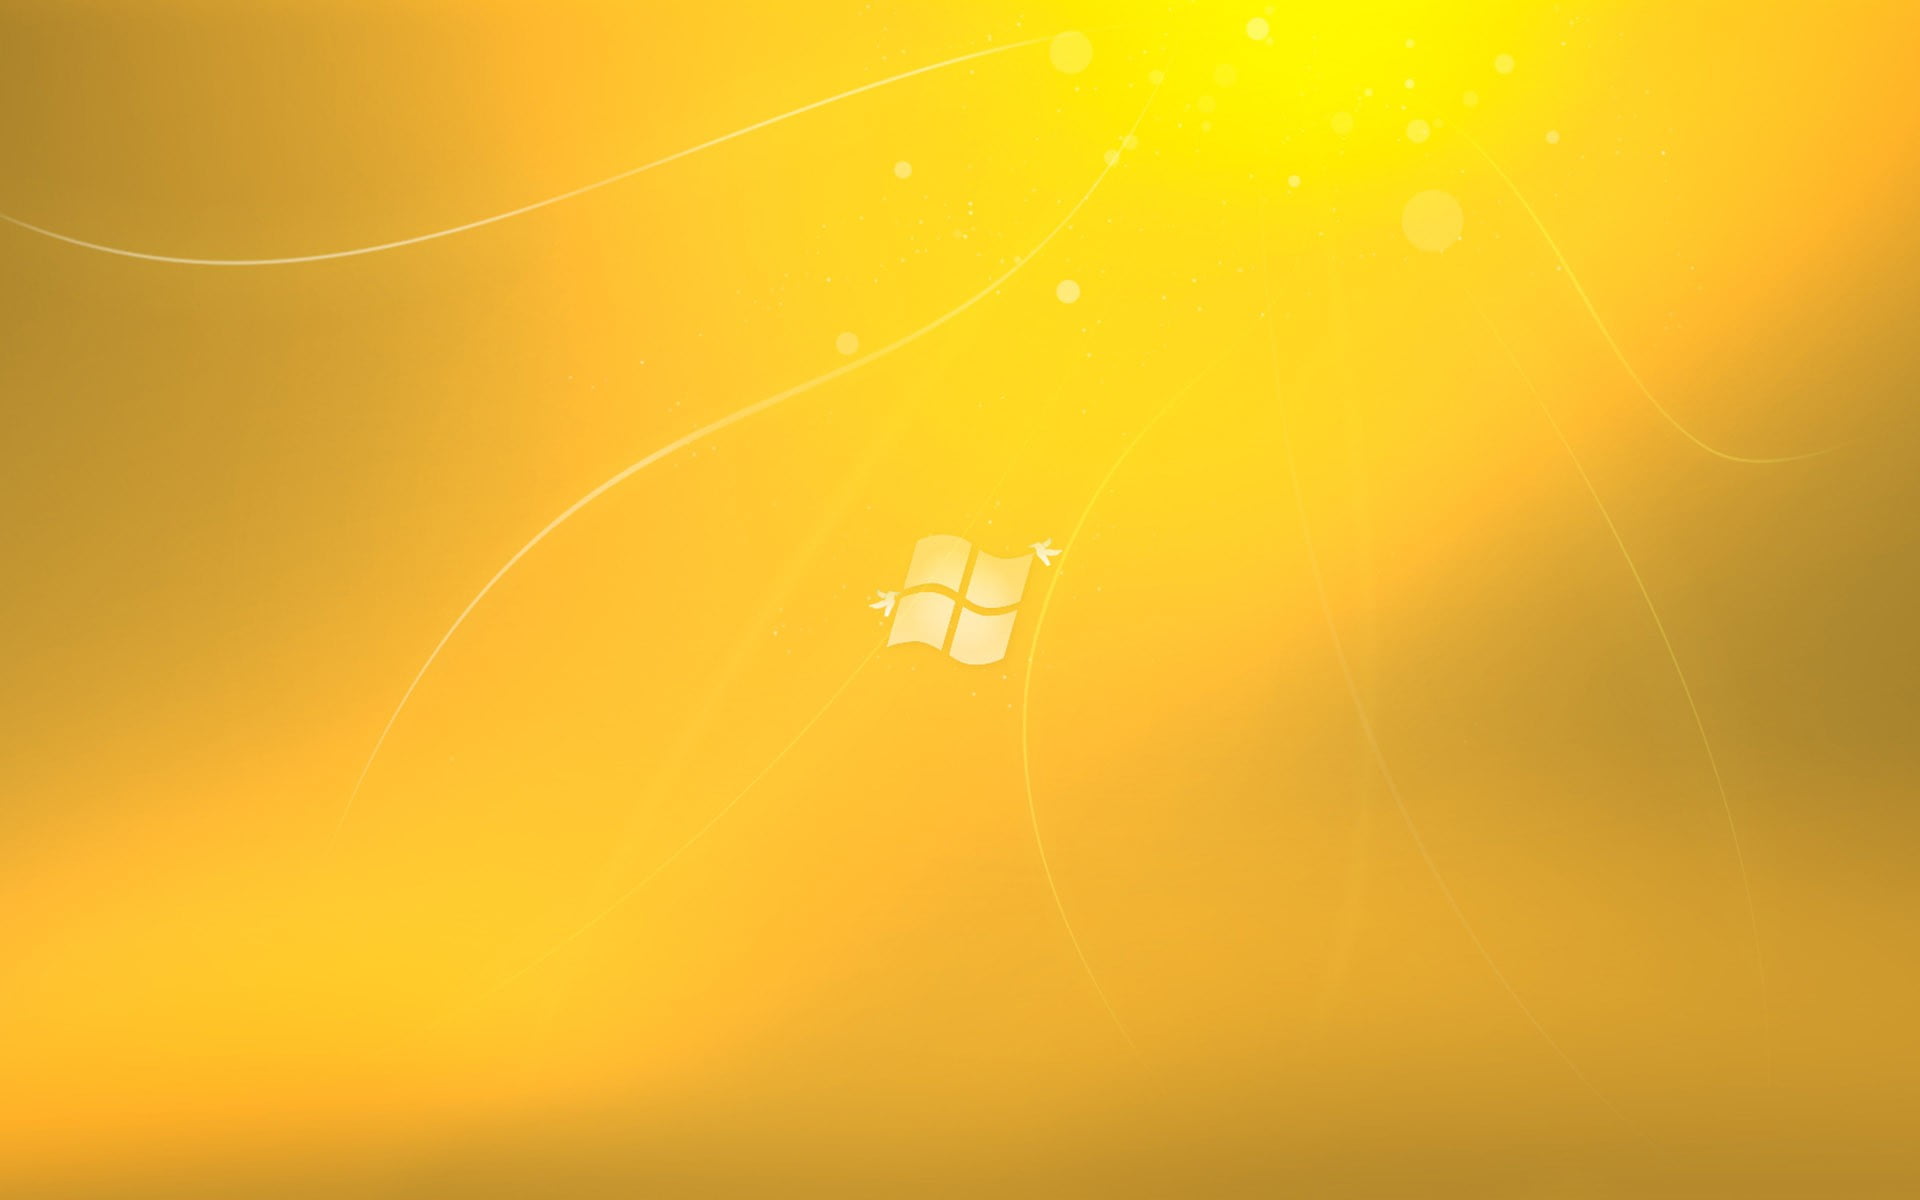 Windows logo, Microsoft Windows, backgrounds, yellow, no people